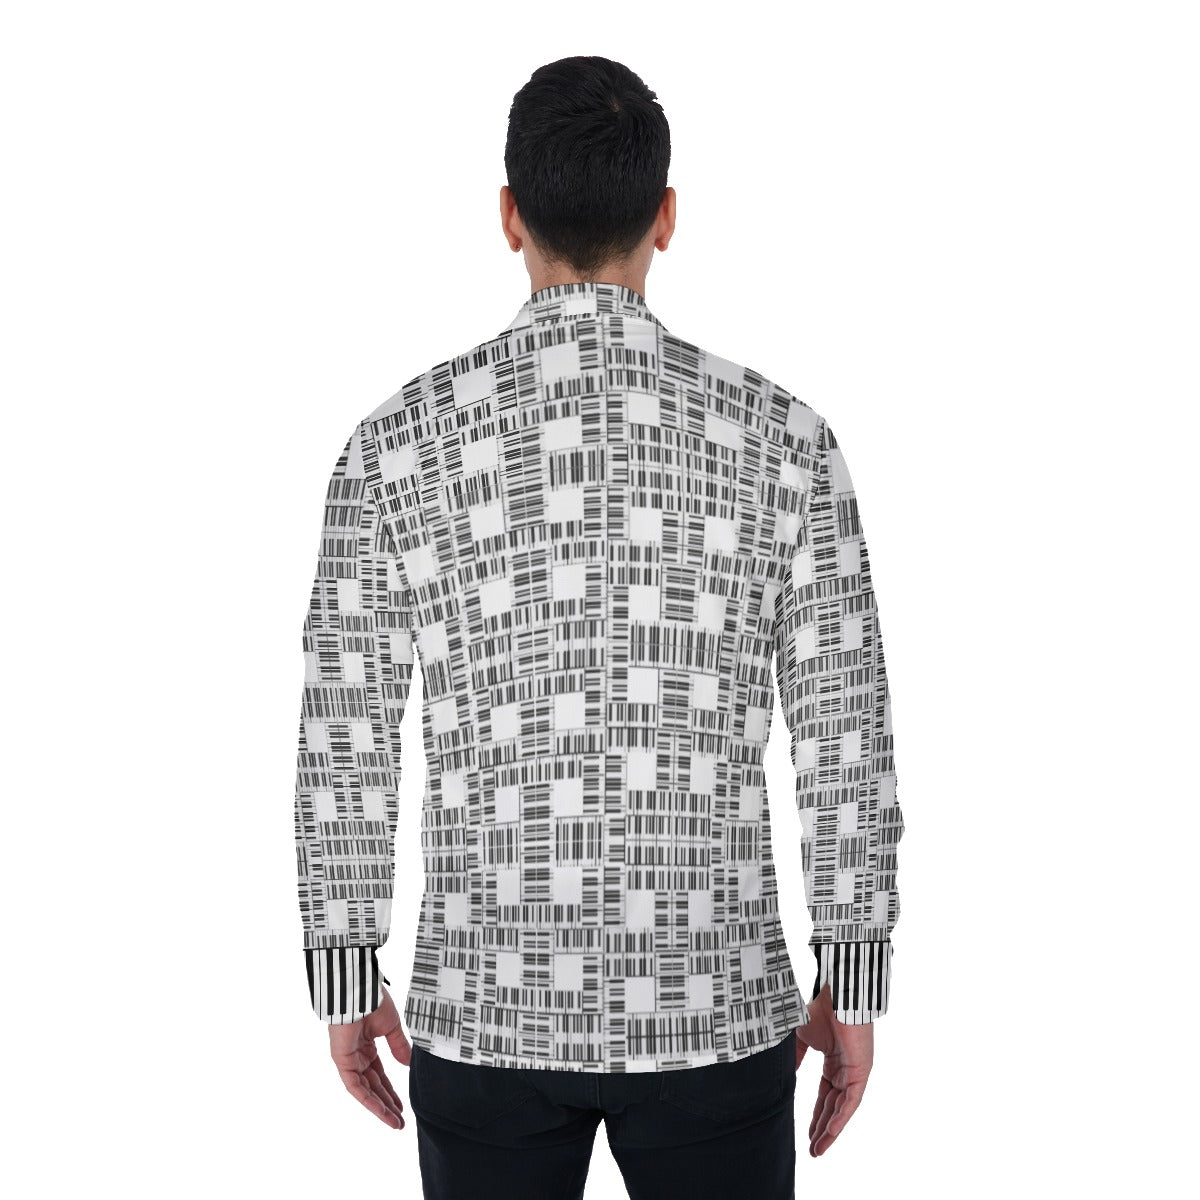 Liberace Piano Key Pattern Men's Long Sleeve Shirt